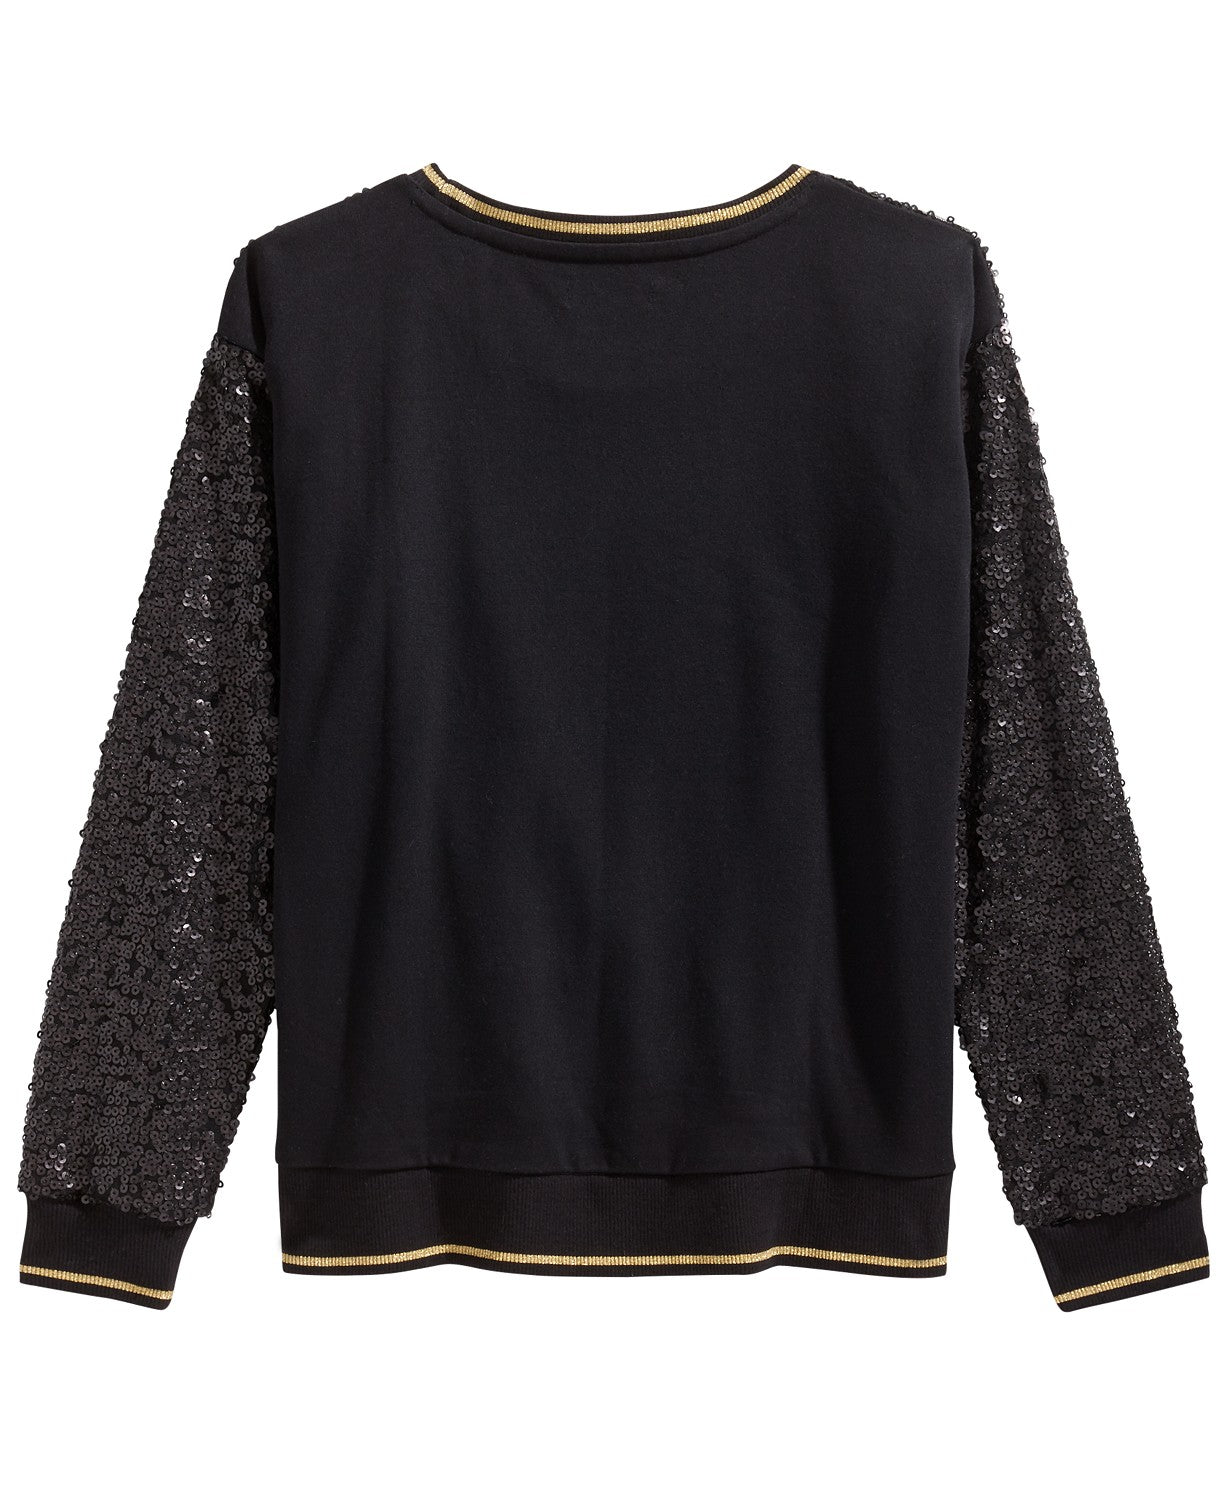 Epic Threads Big Kid Girls Sequin Sweater